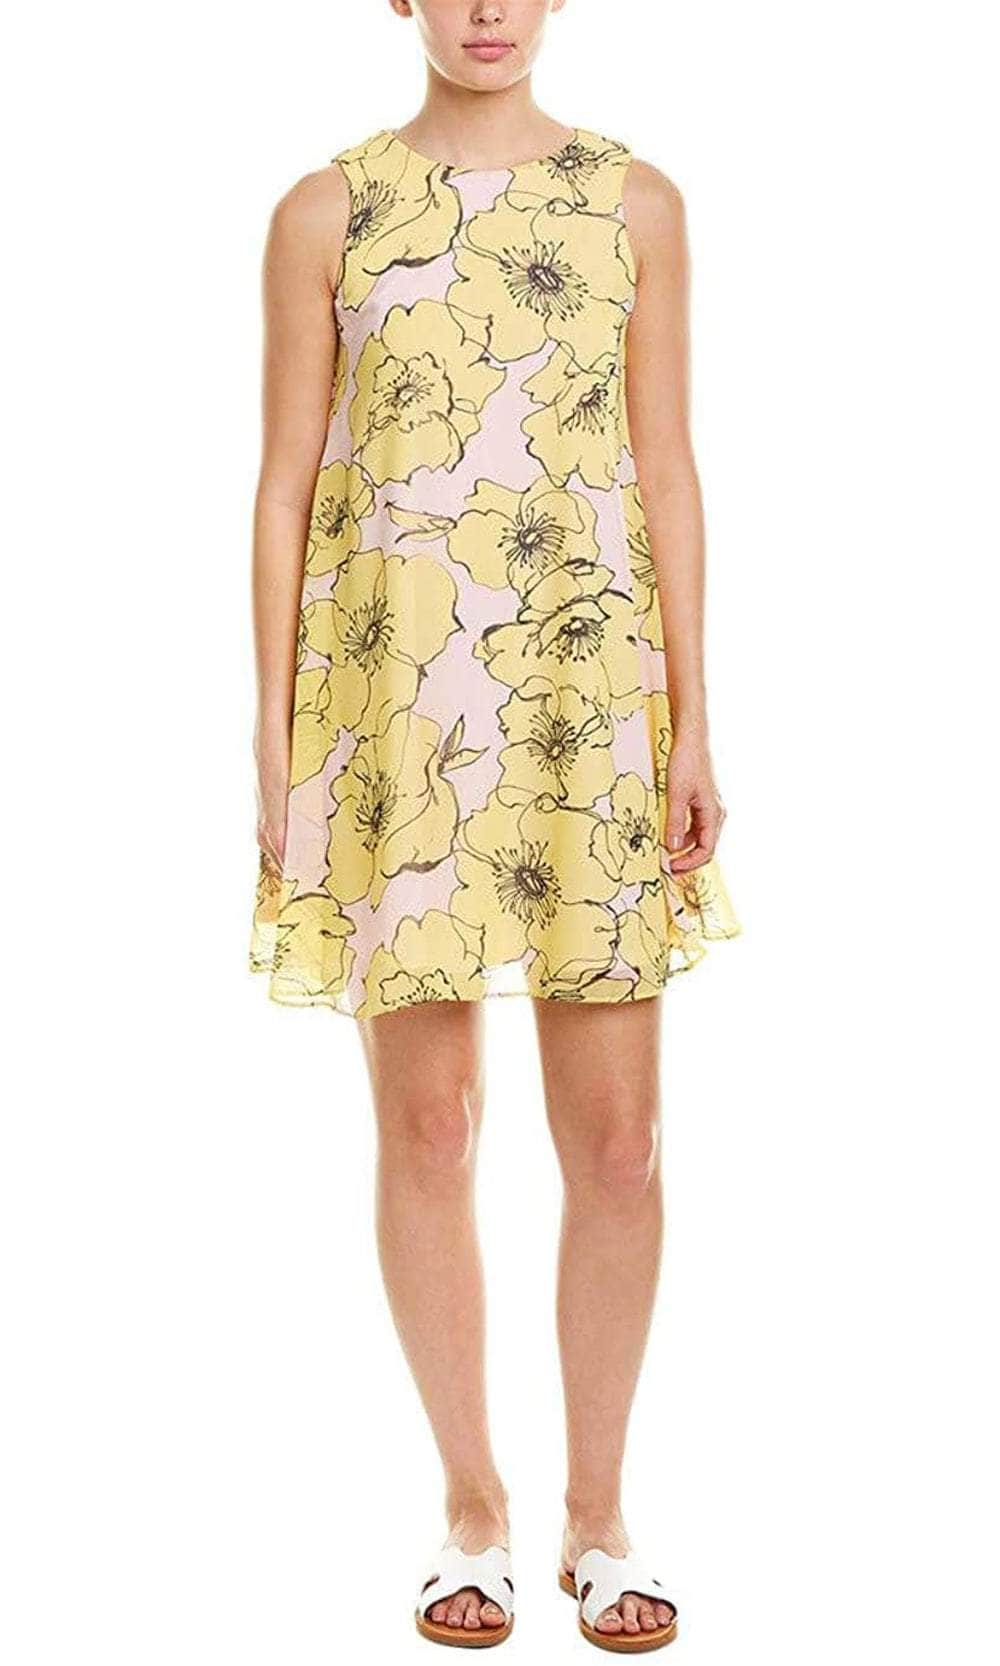 Taylor 1447M - Floral Sleeveless Stretch Fabric Short Dress
